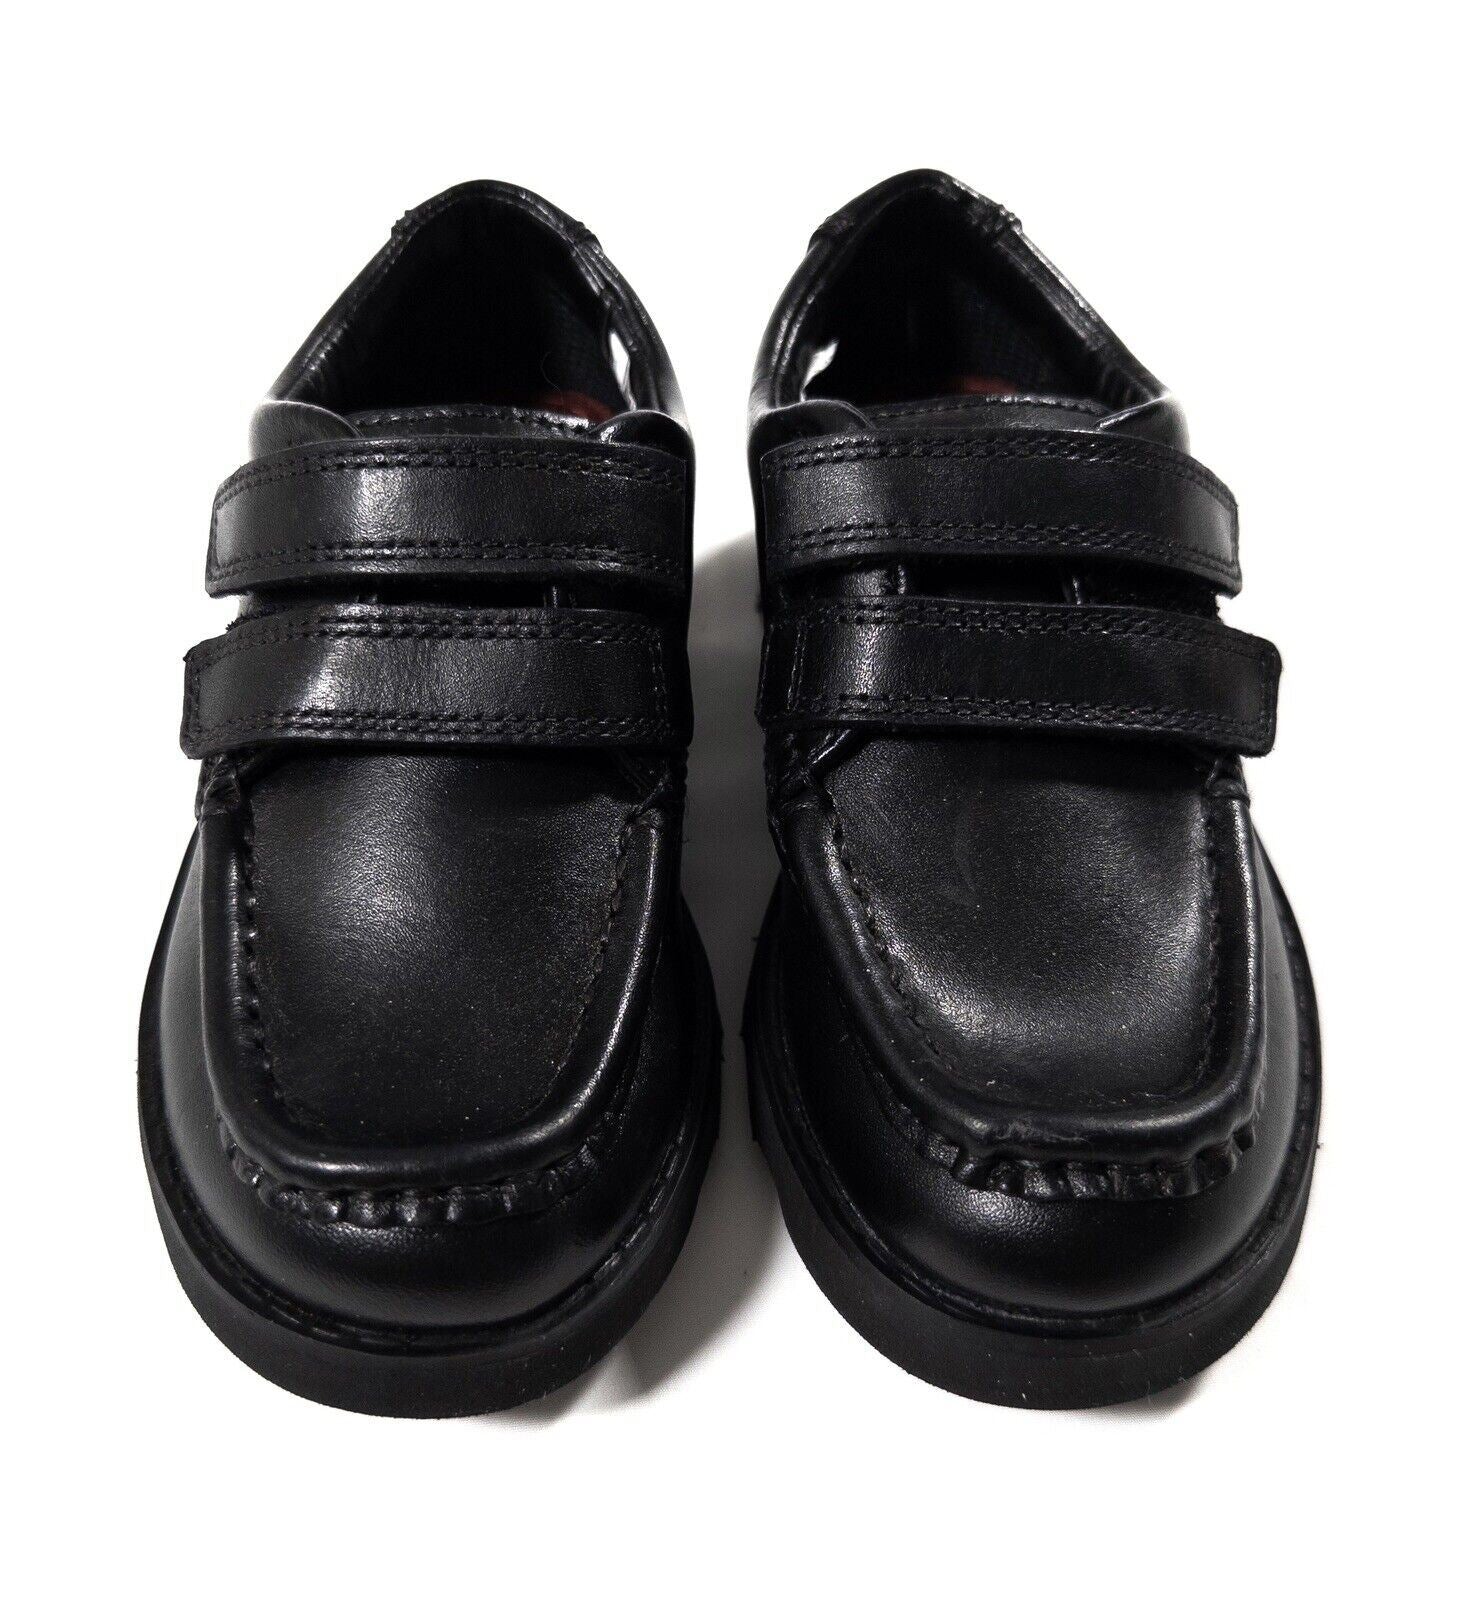 CLARKS Kids Boys Black Leather School Shoes Size UK 8 F